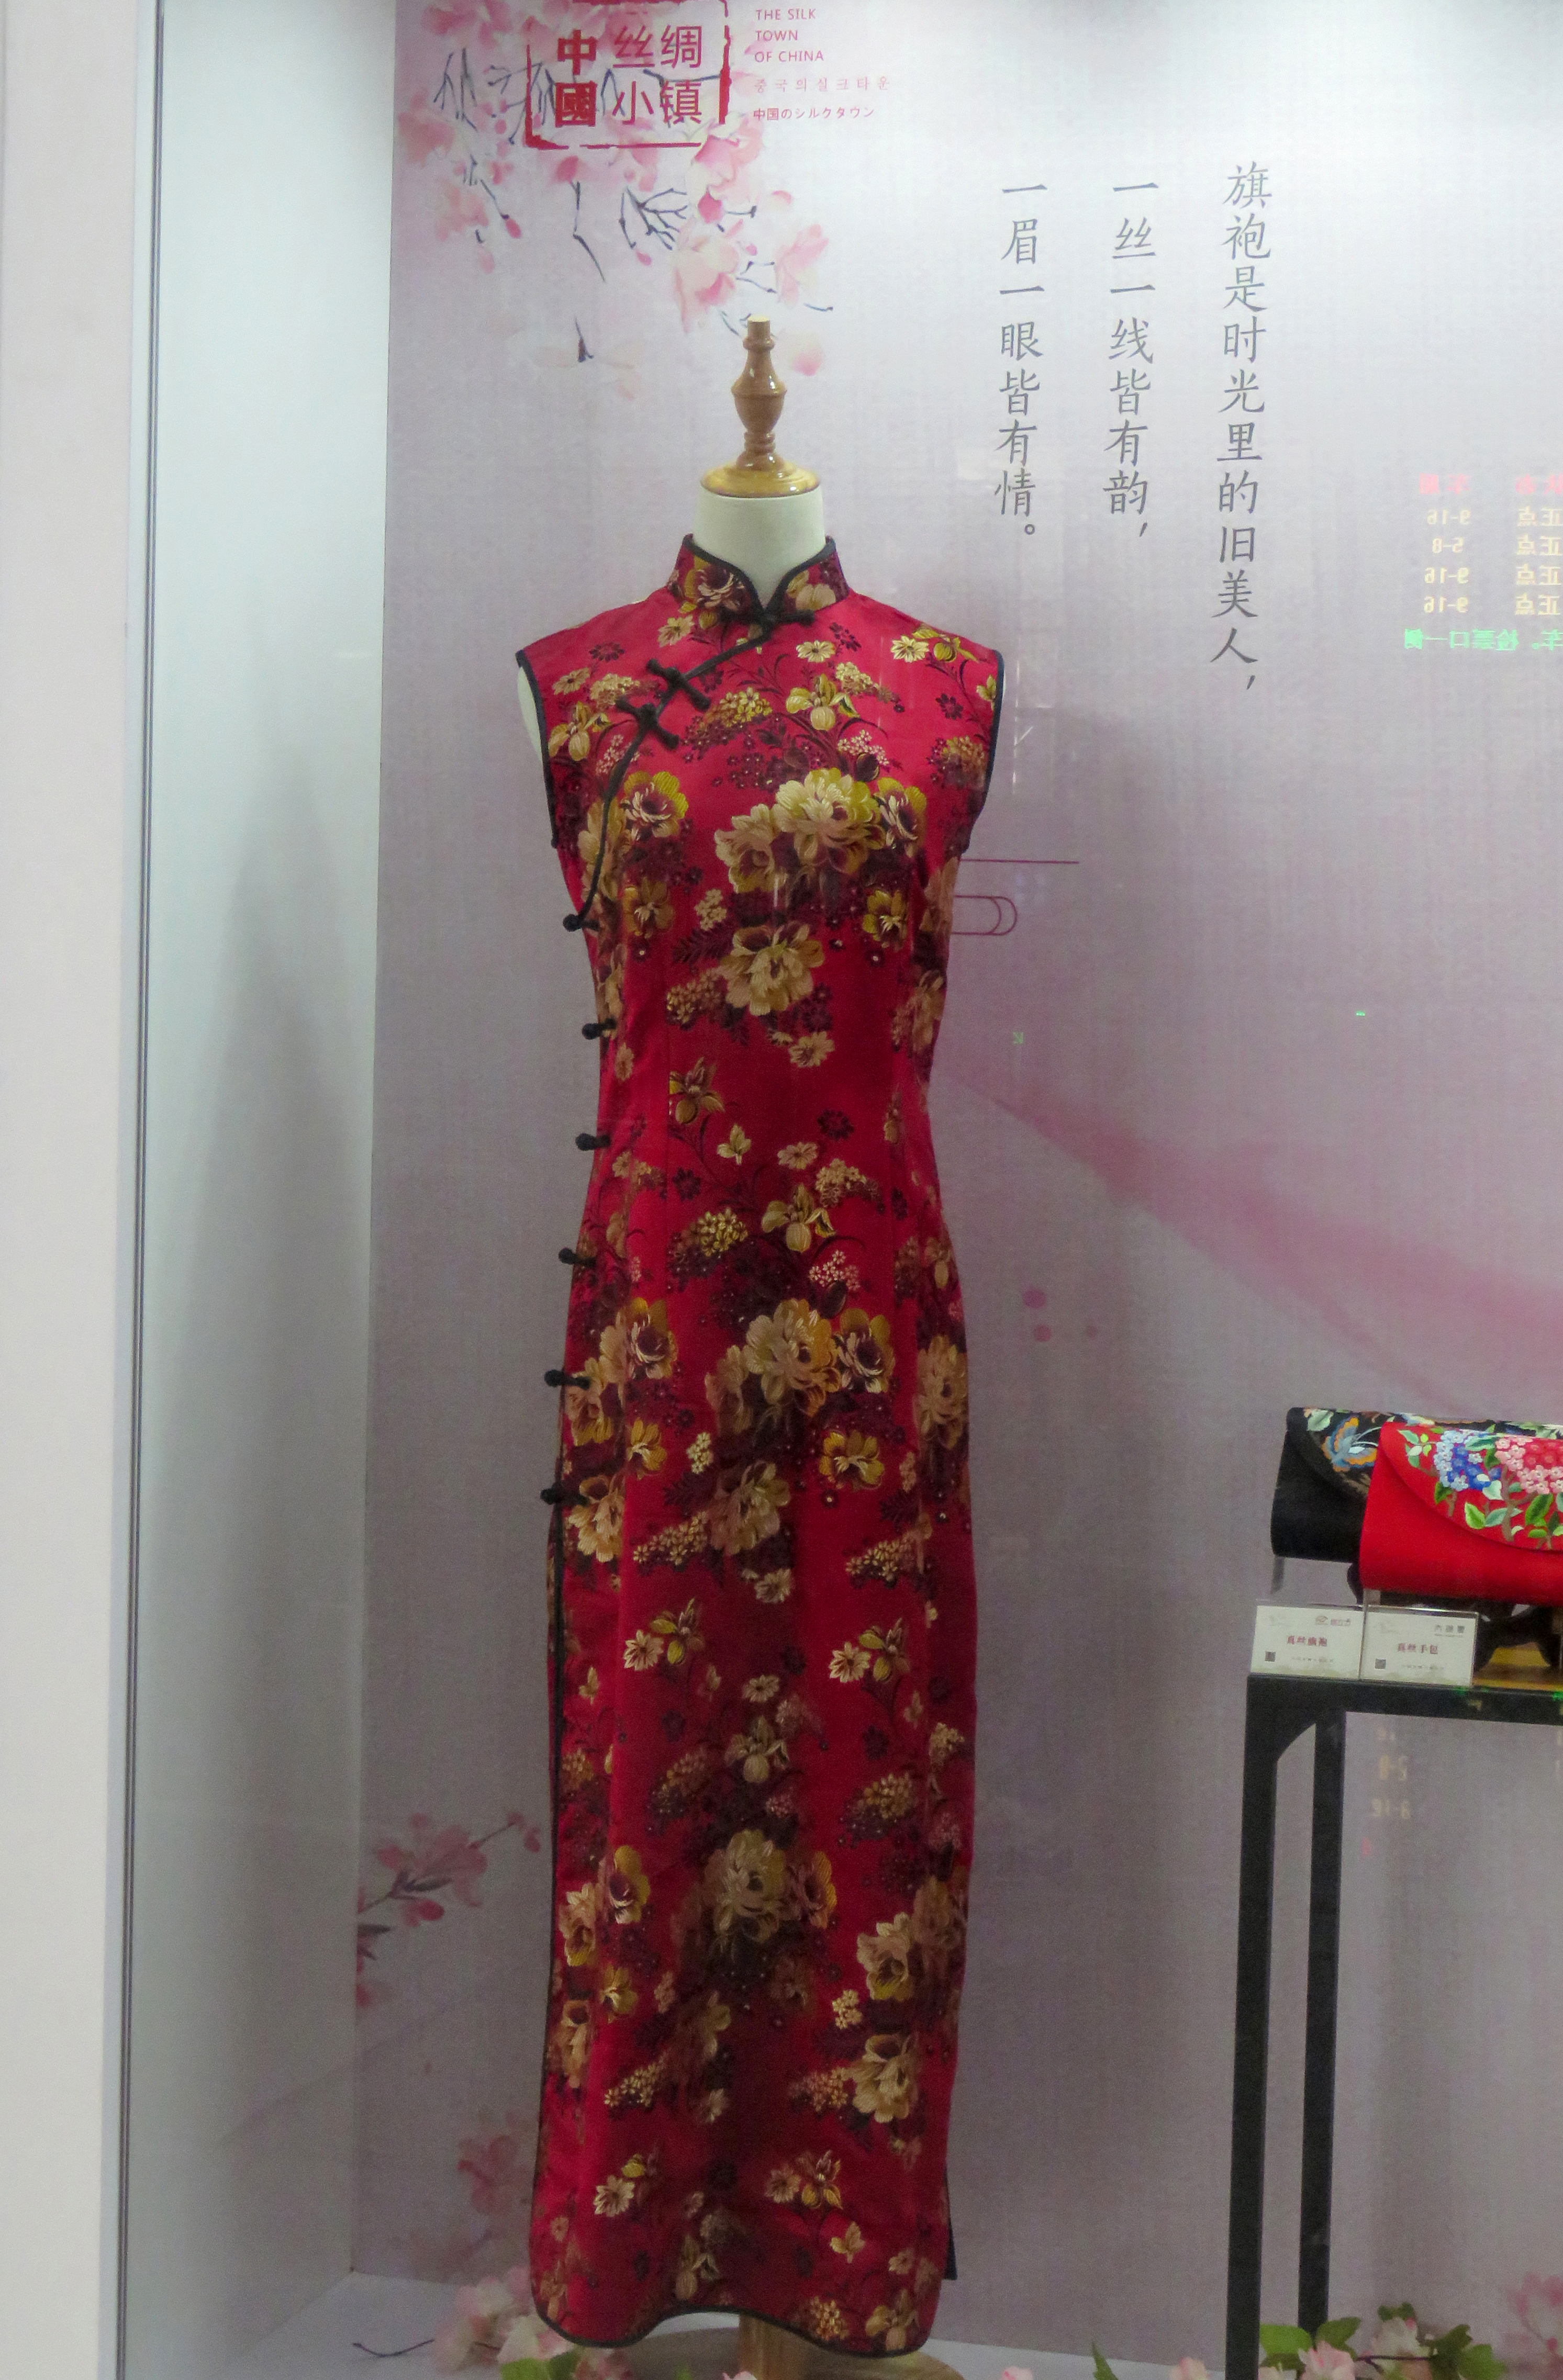 Red cheongsam on display at SHQ (20180101102112).jpg